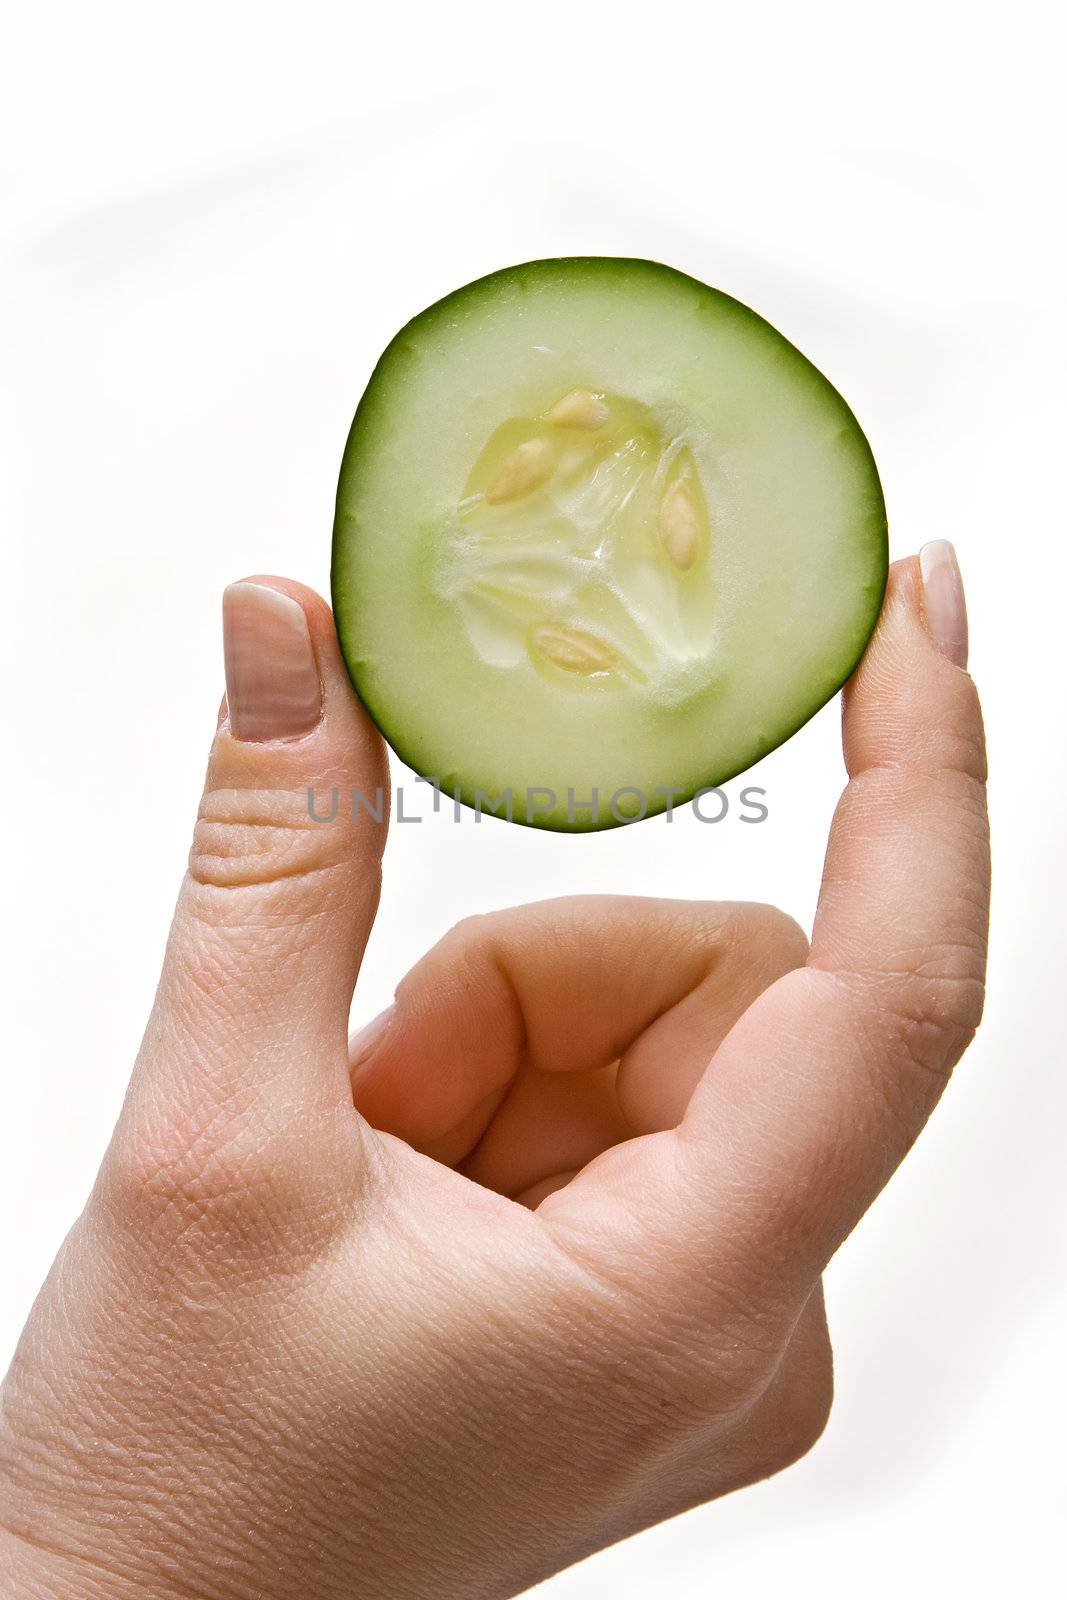 Cucumber wedge by phakimata